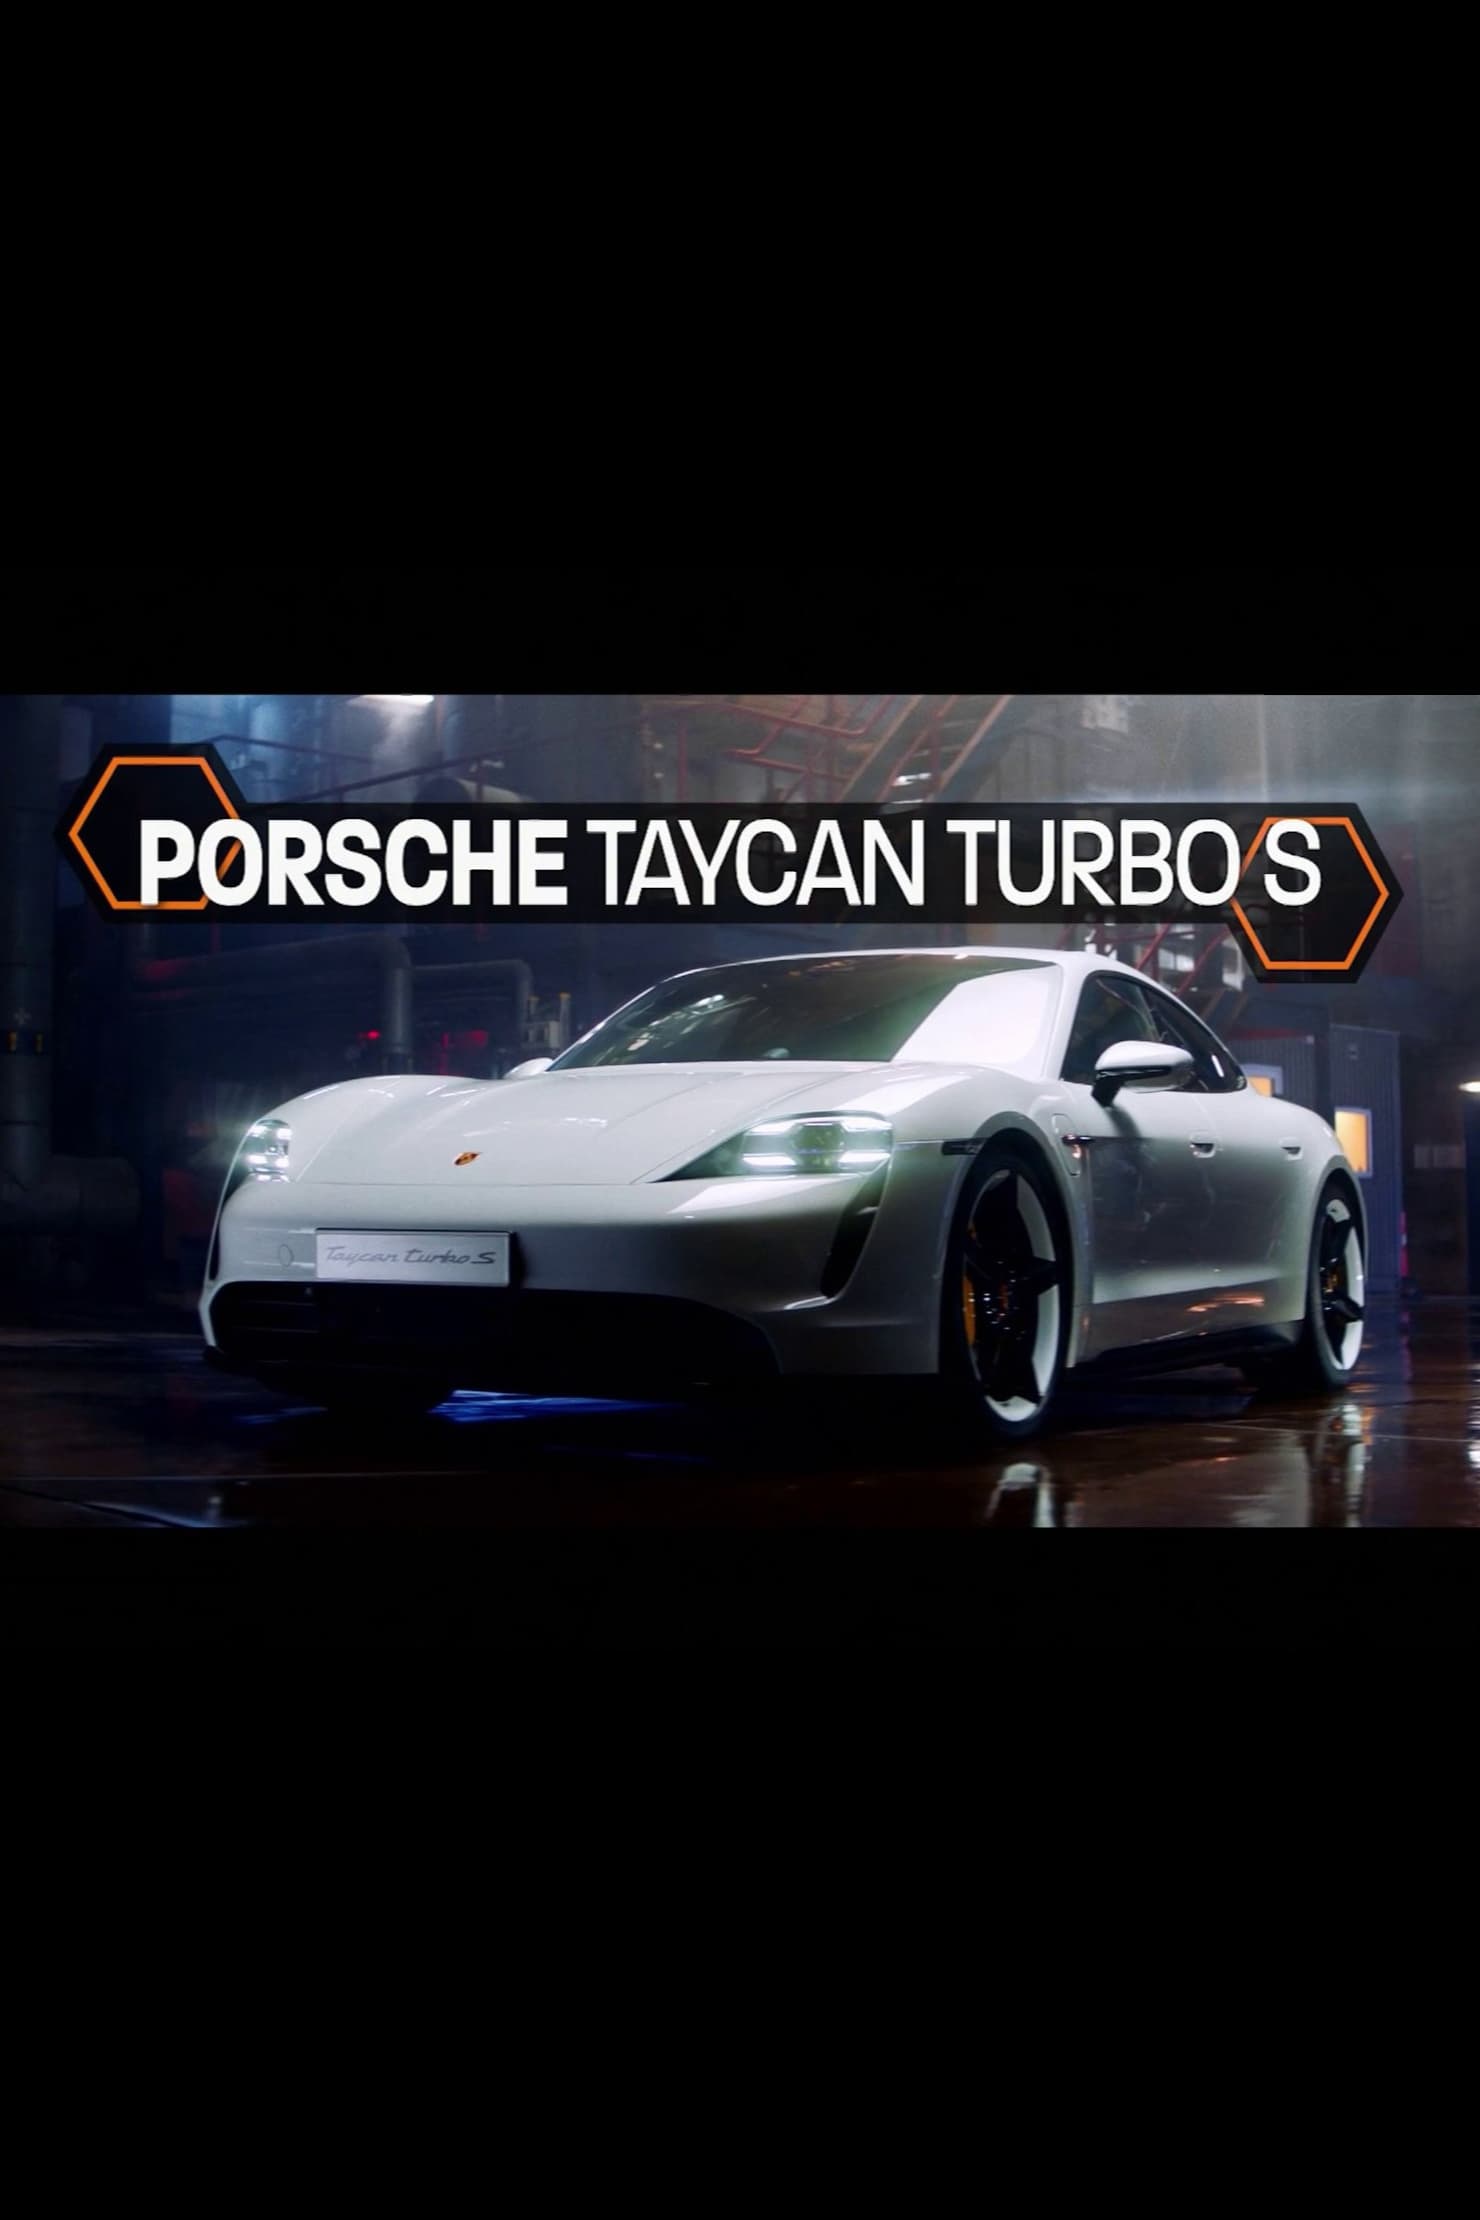 Porsche Taycan Turbo S - Inside the Factory